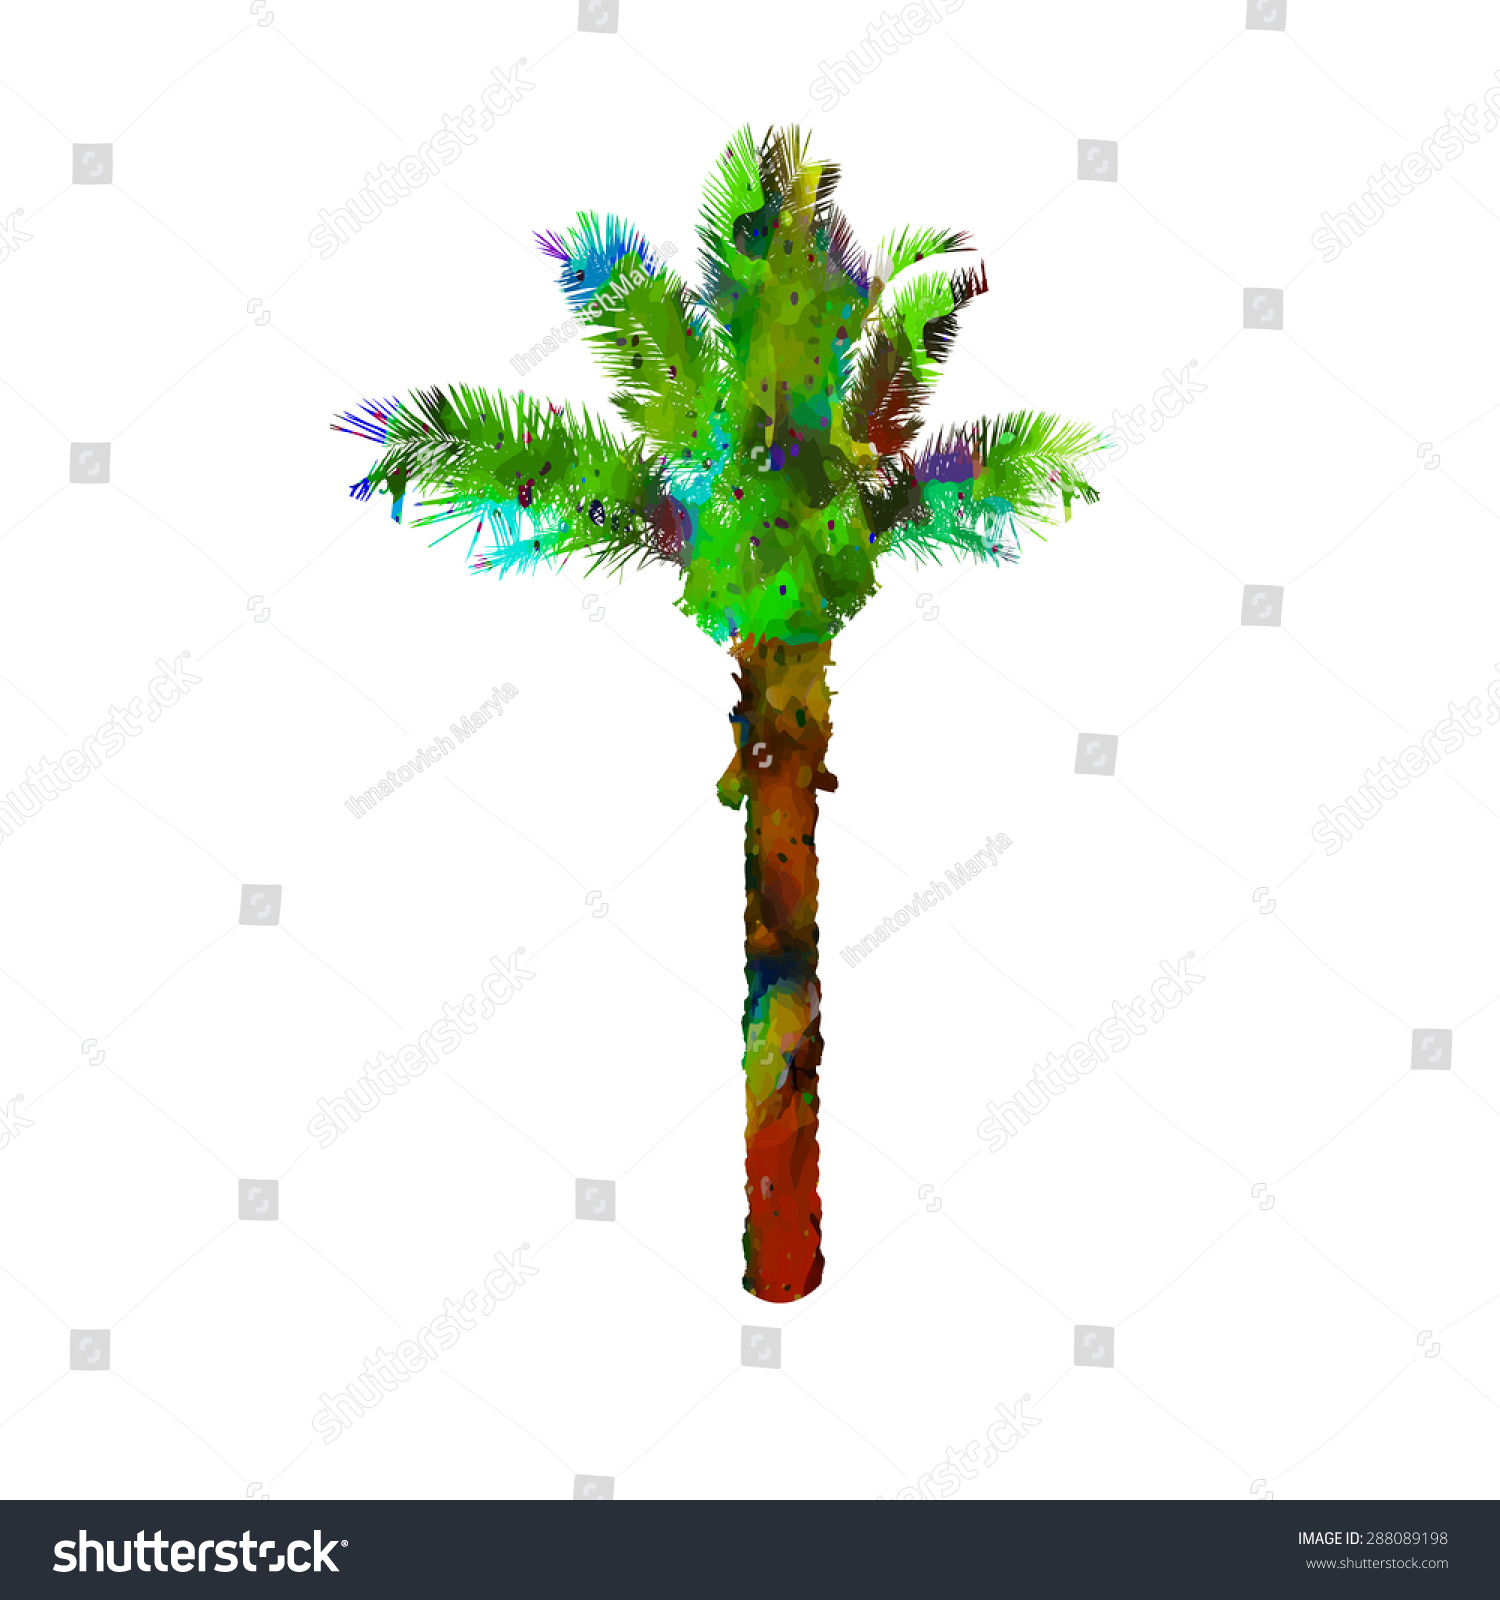 Watercolor Palm Tree. Vector - 288089198 : Shutterstock